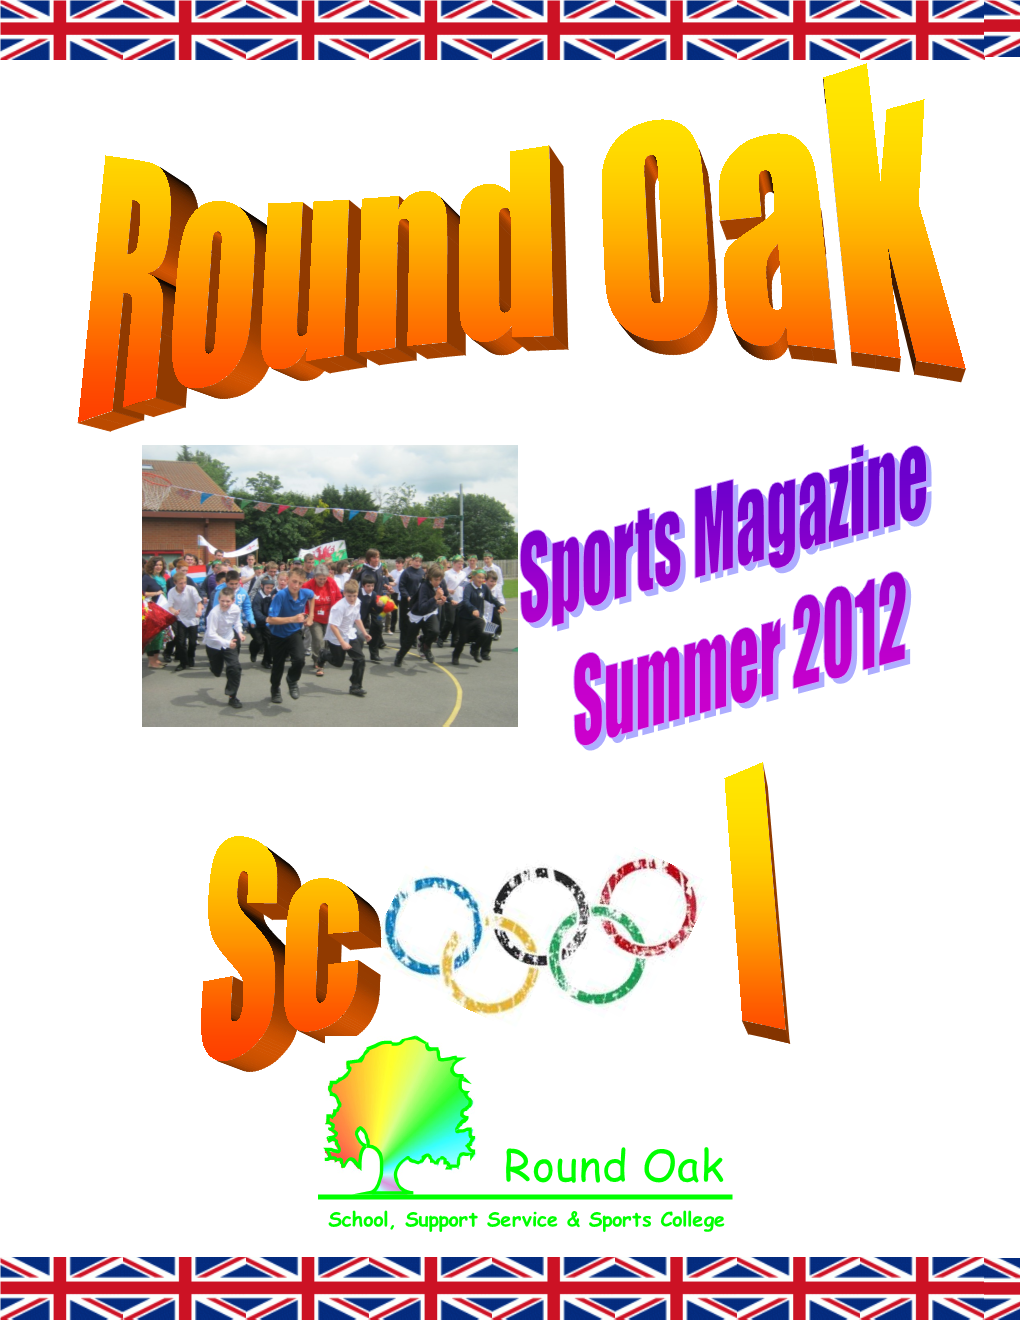 Round Oak School, Support Service & Sports College